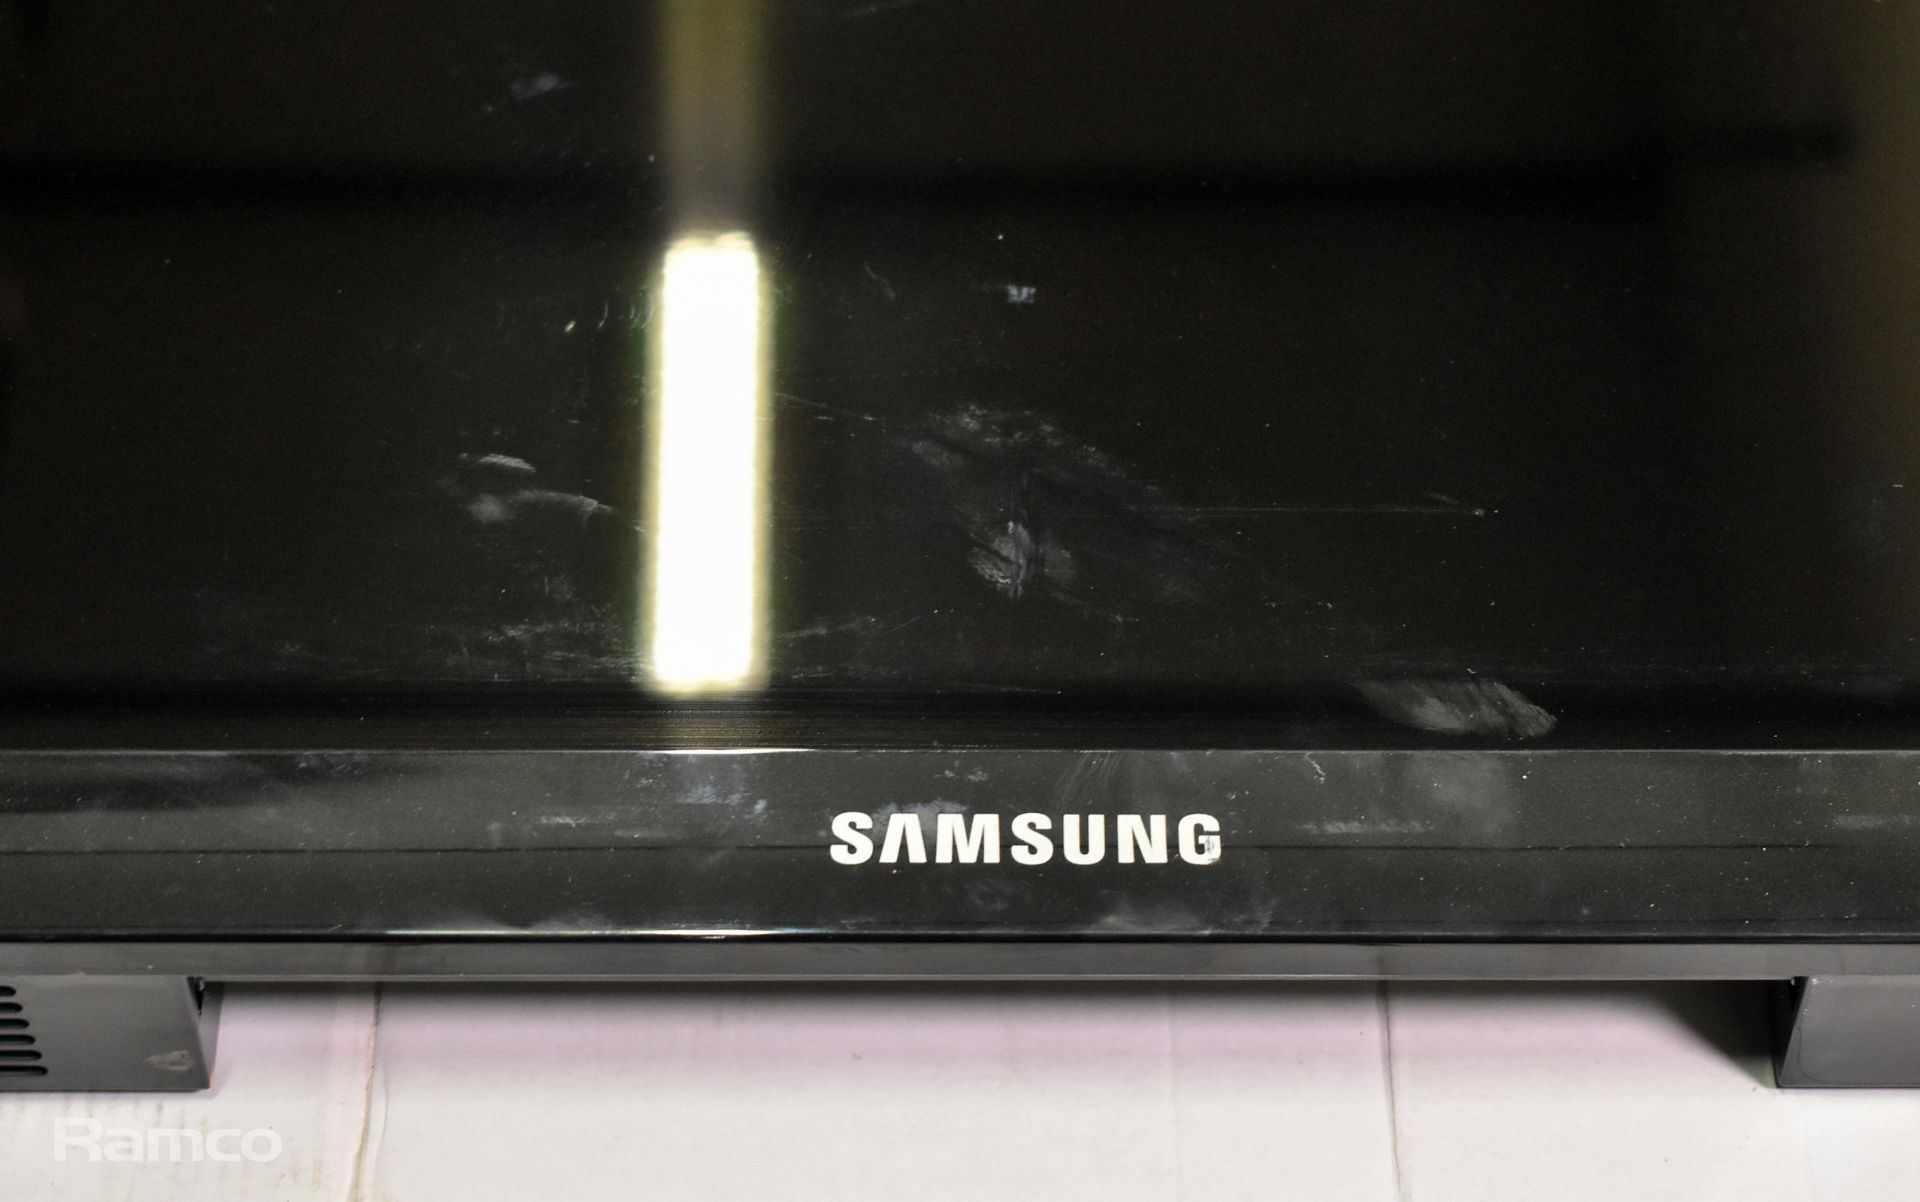 2x Samsung UE40D5003BW 40 inch LED TVs, Samsung UE40D5003BW 40 inch LED TV - Image 12 of 14